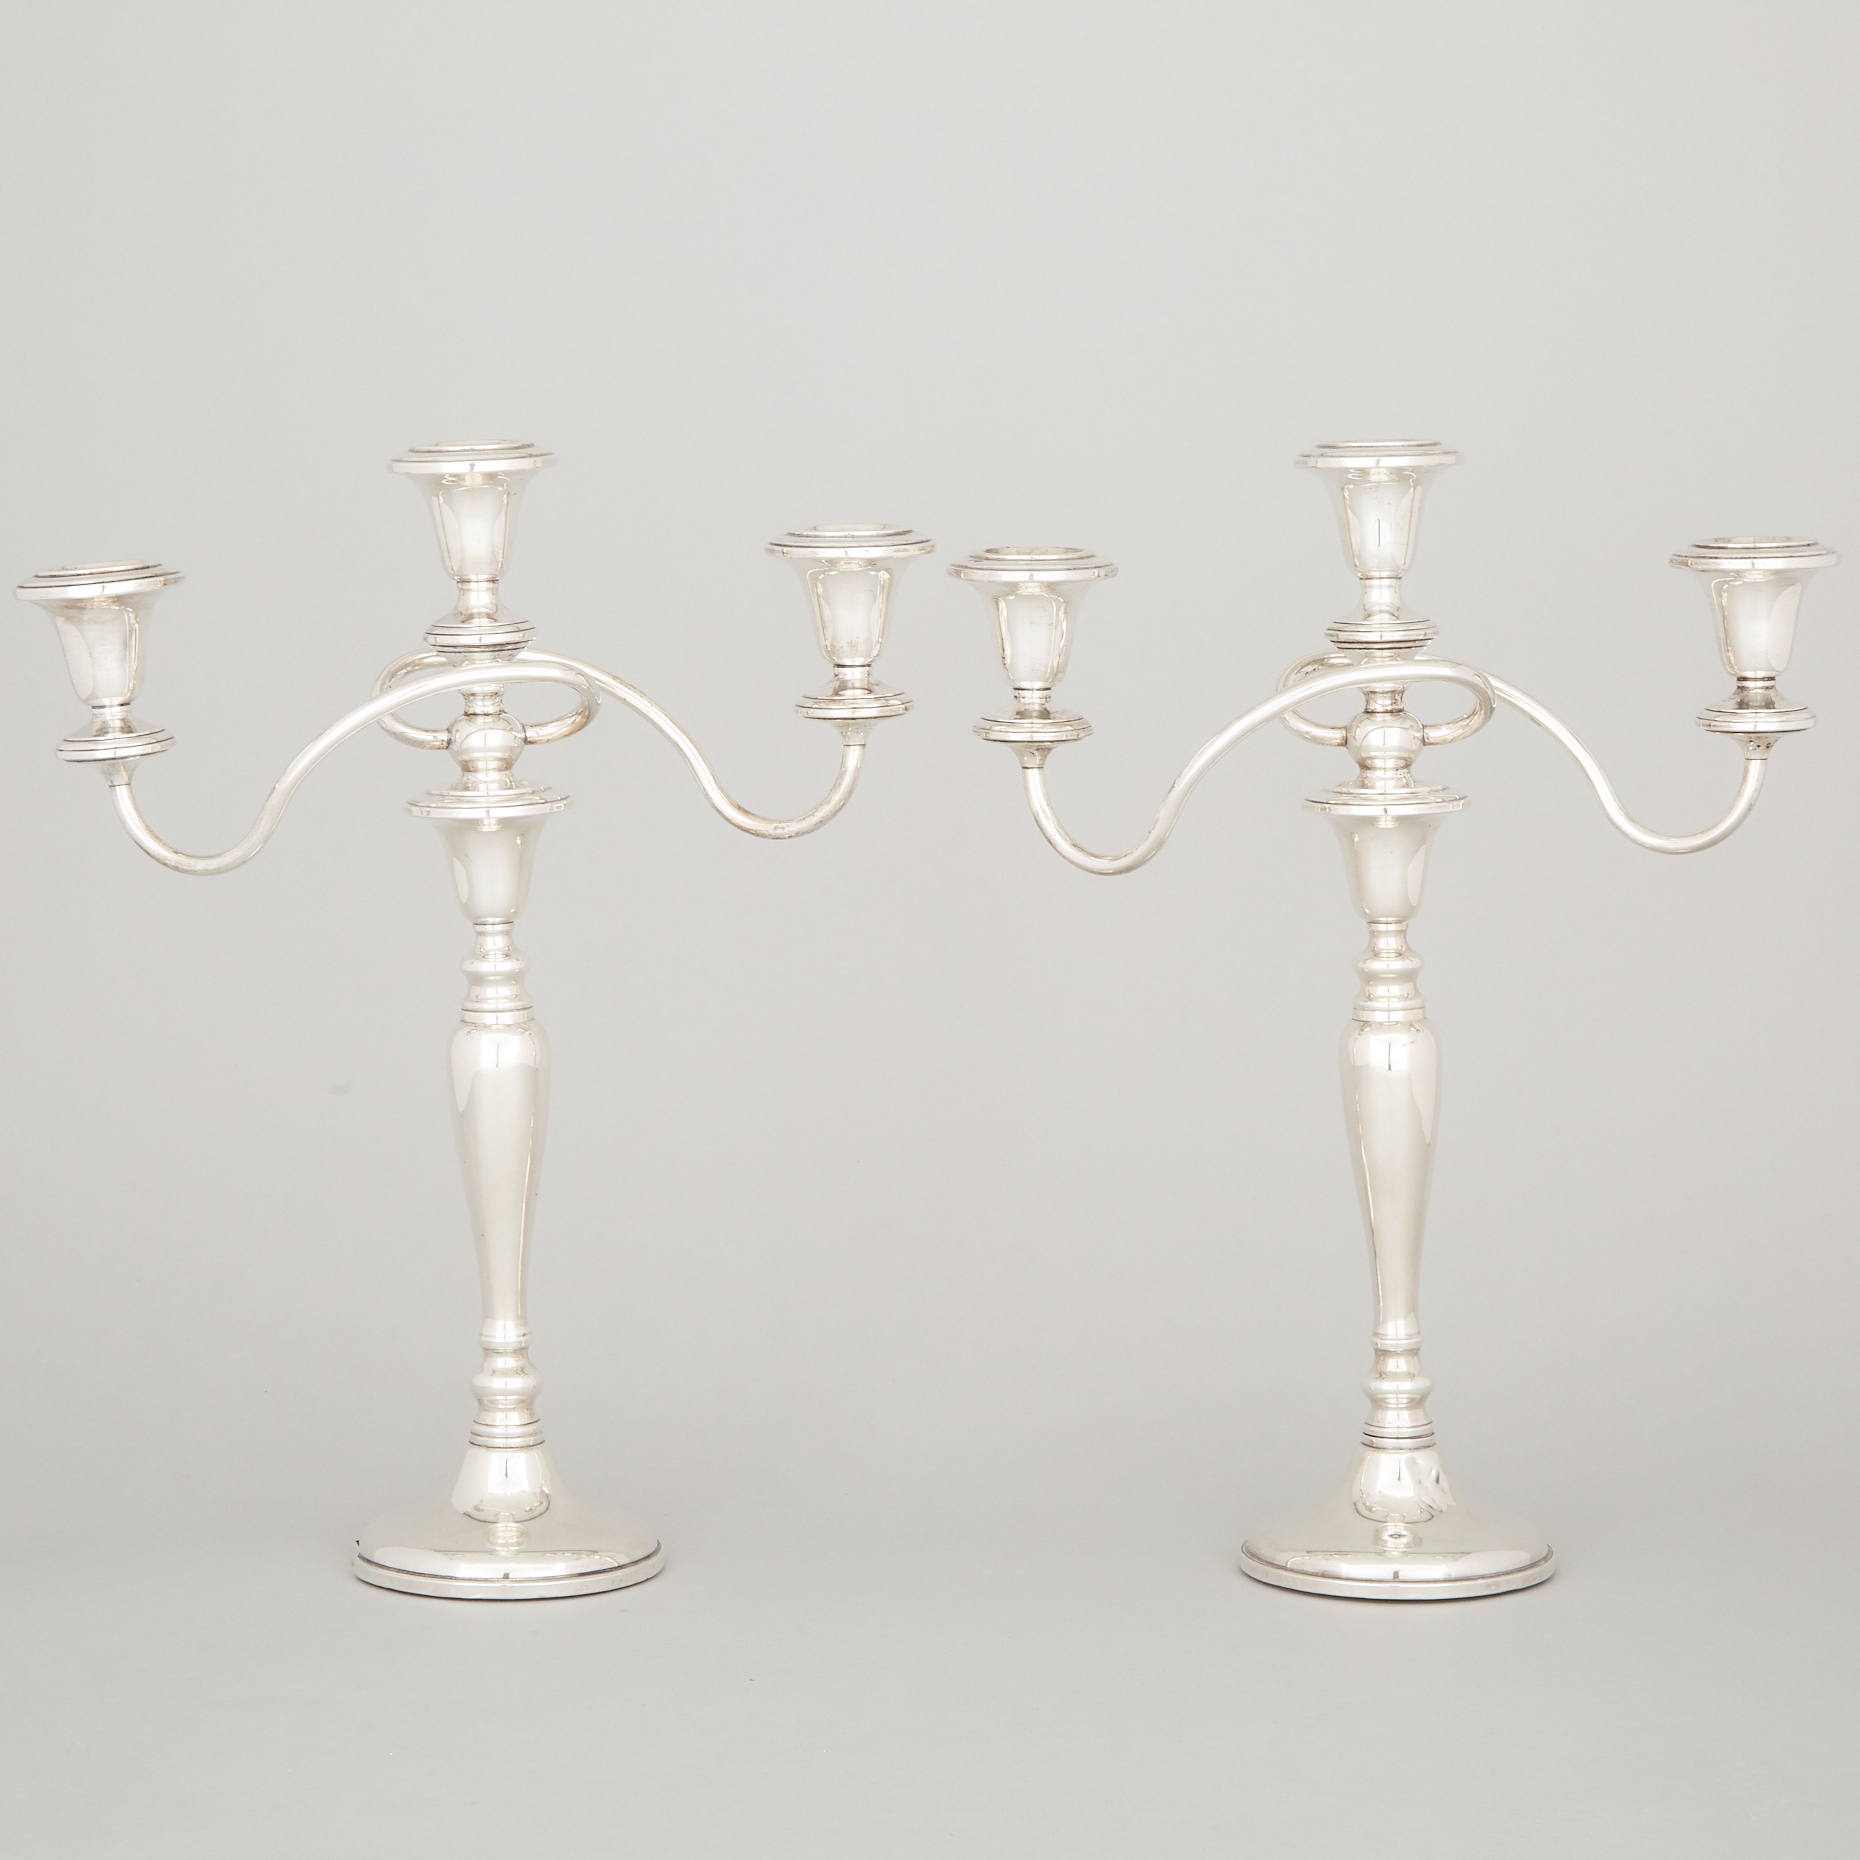 Pair of American Silver Three-Light Candelabra, Revere Silversmiths, Brooklyn, N.Y., 20th century